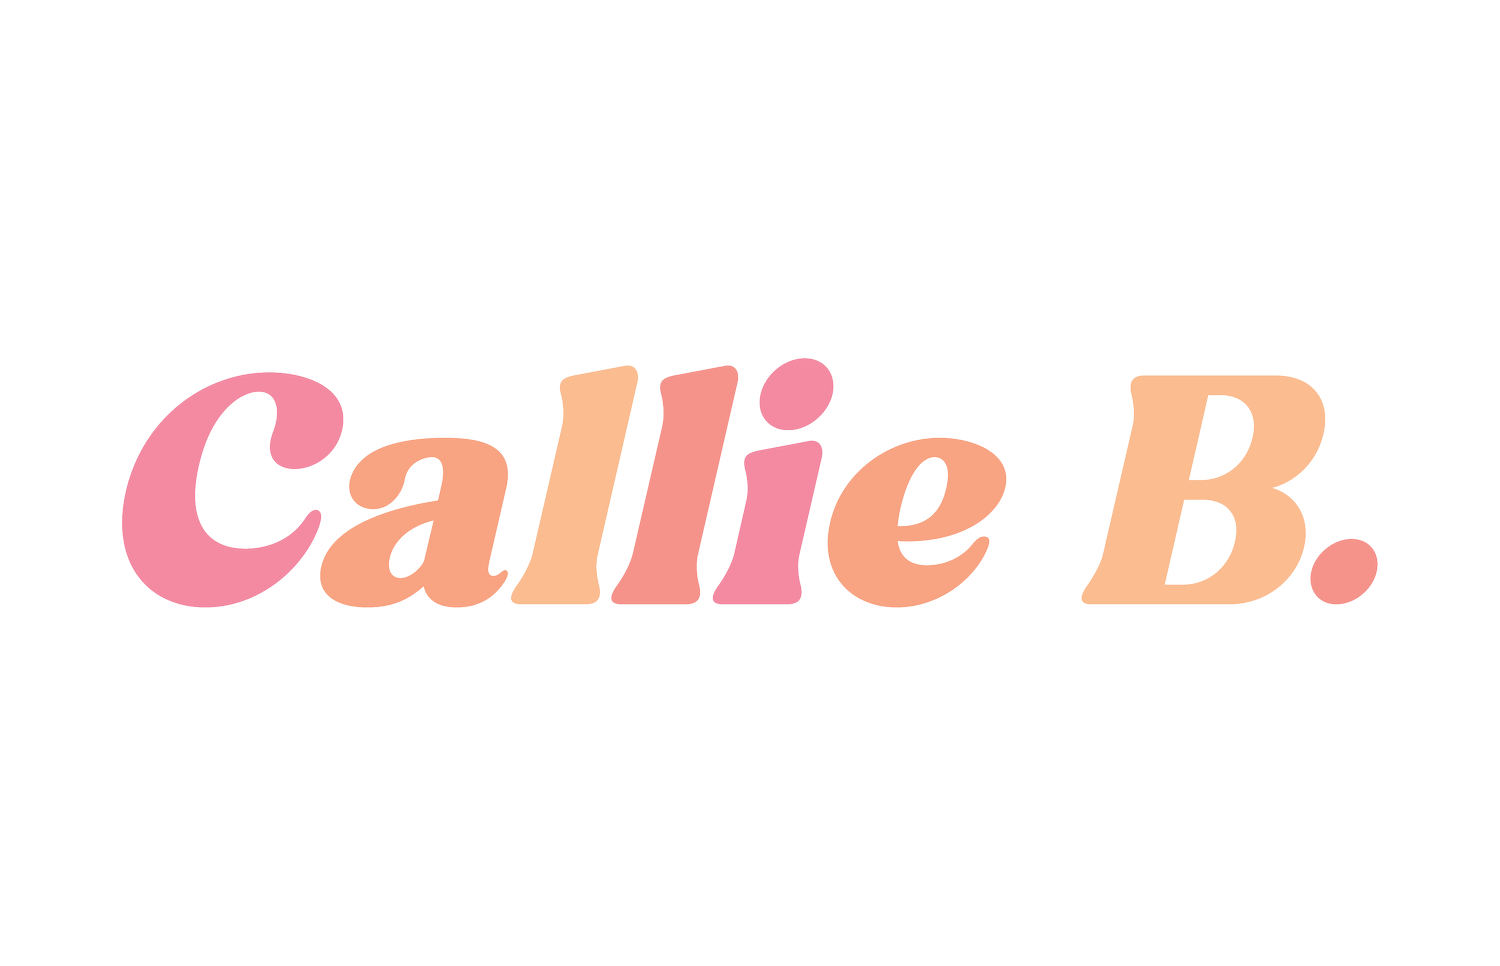 Peak Performance with Callie